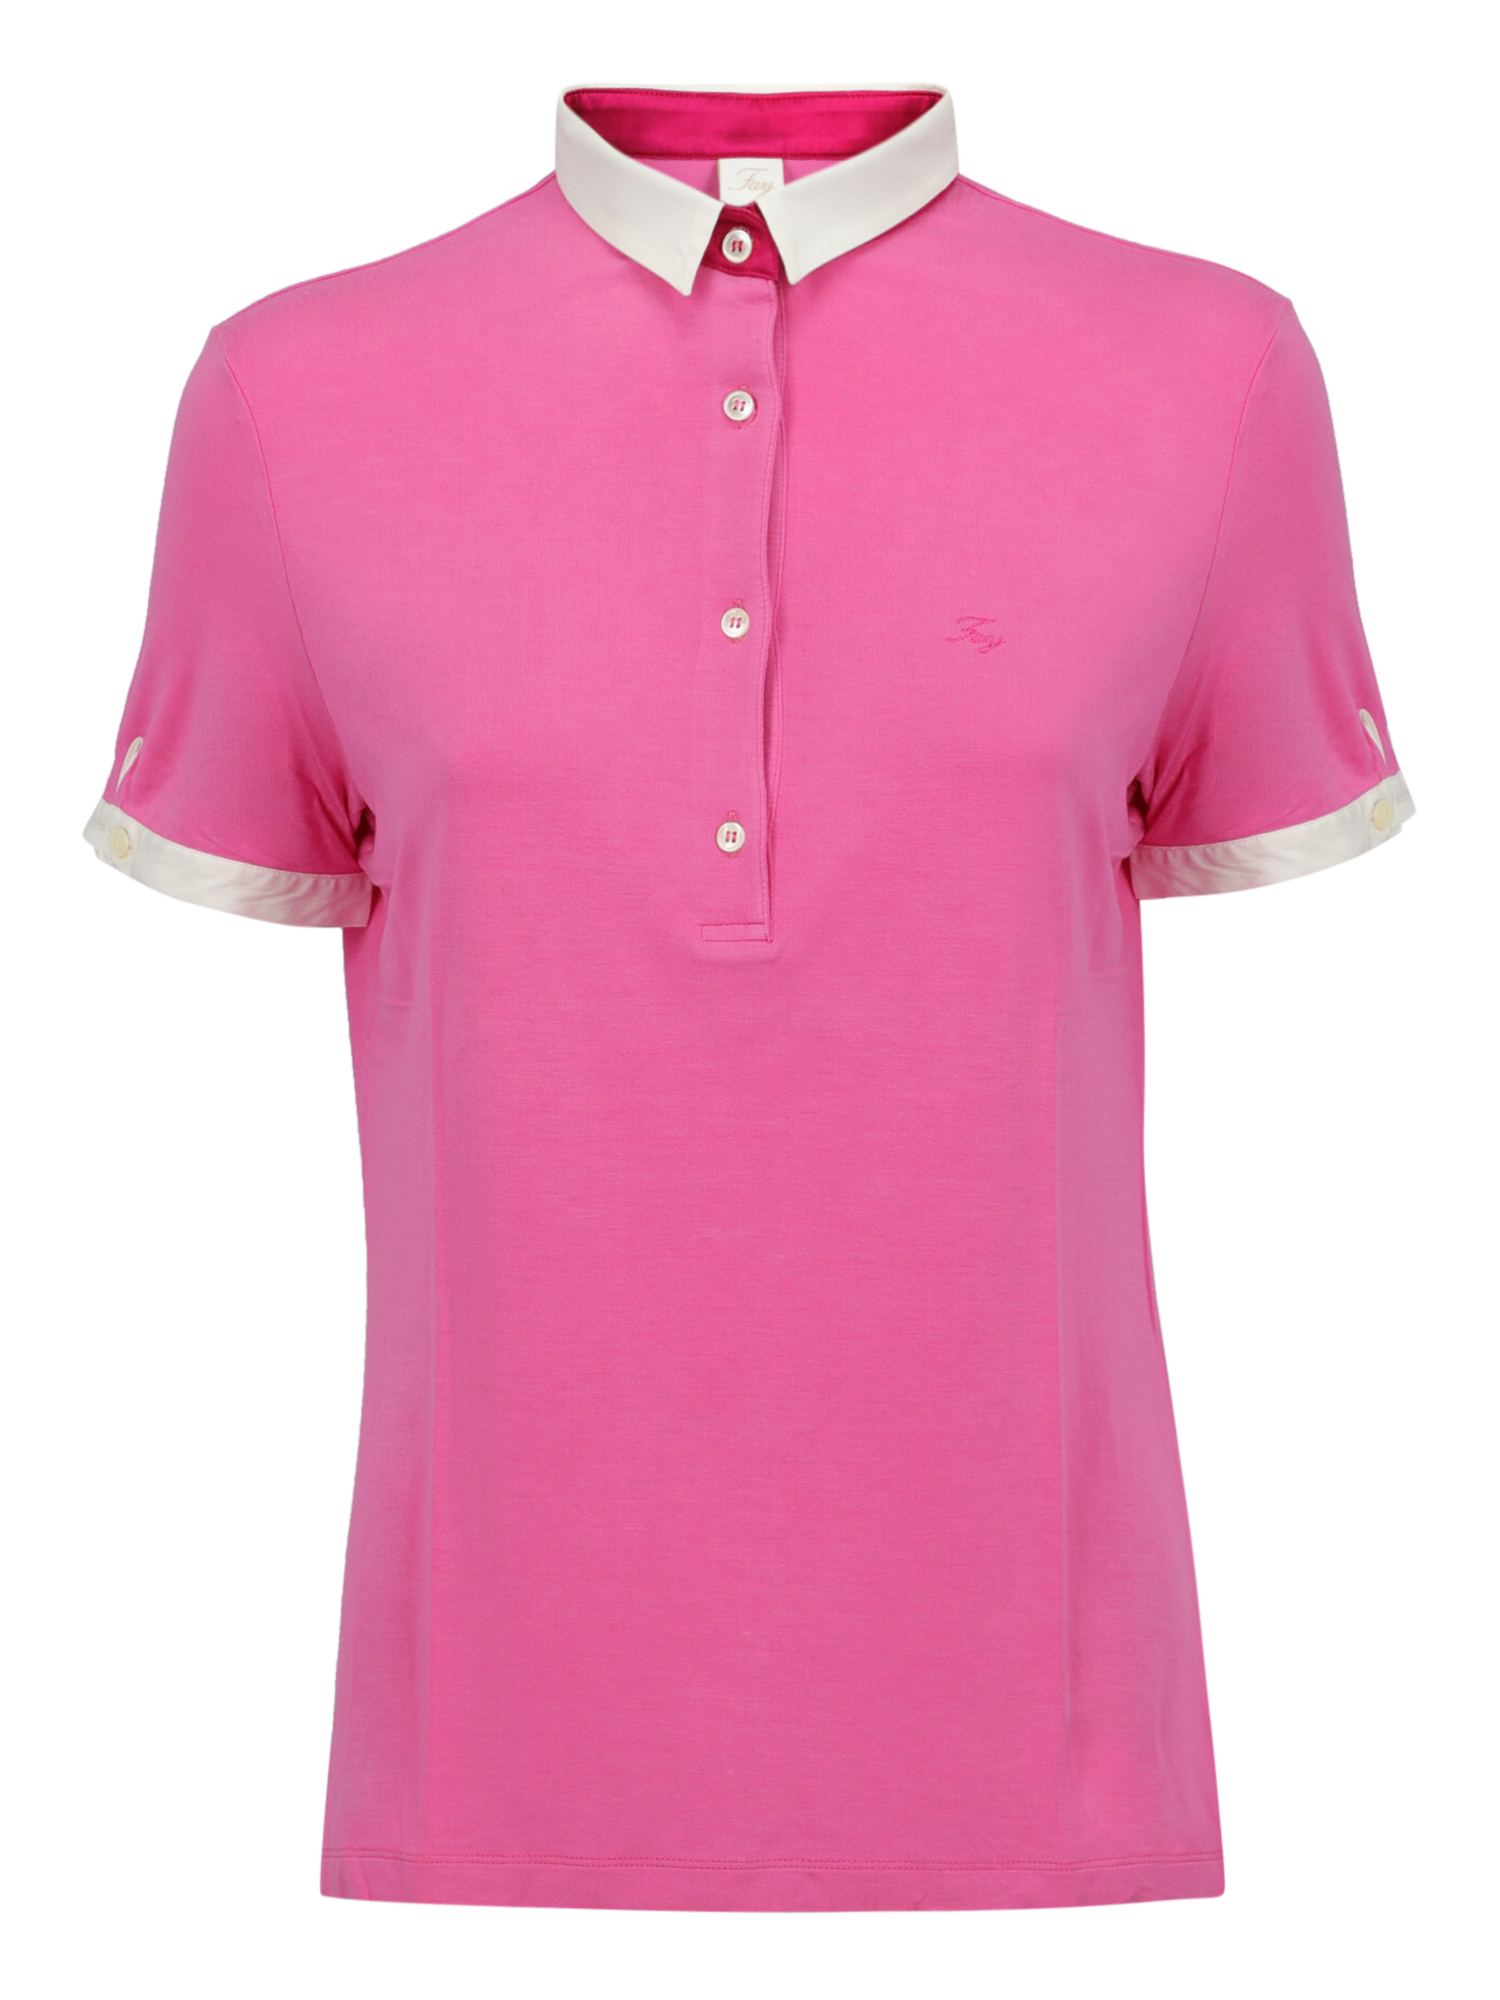 Damen T-shirts Und Oberteile - Fay - In Pink Synthetic Fibers - Größe:  -